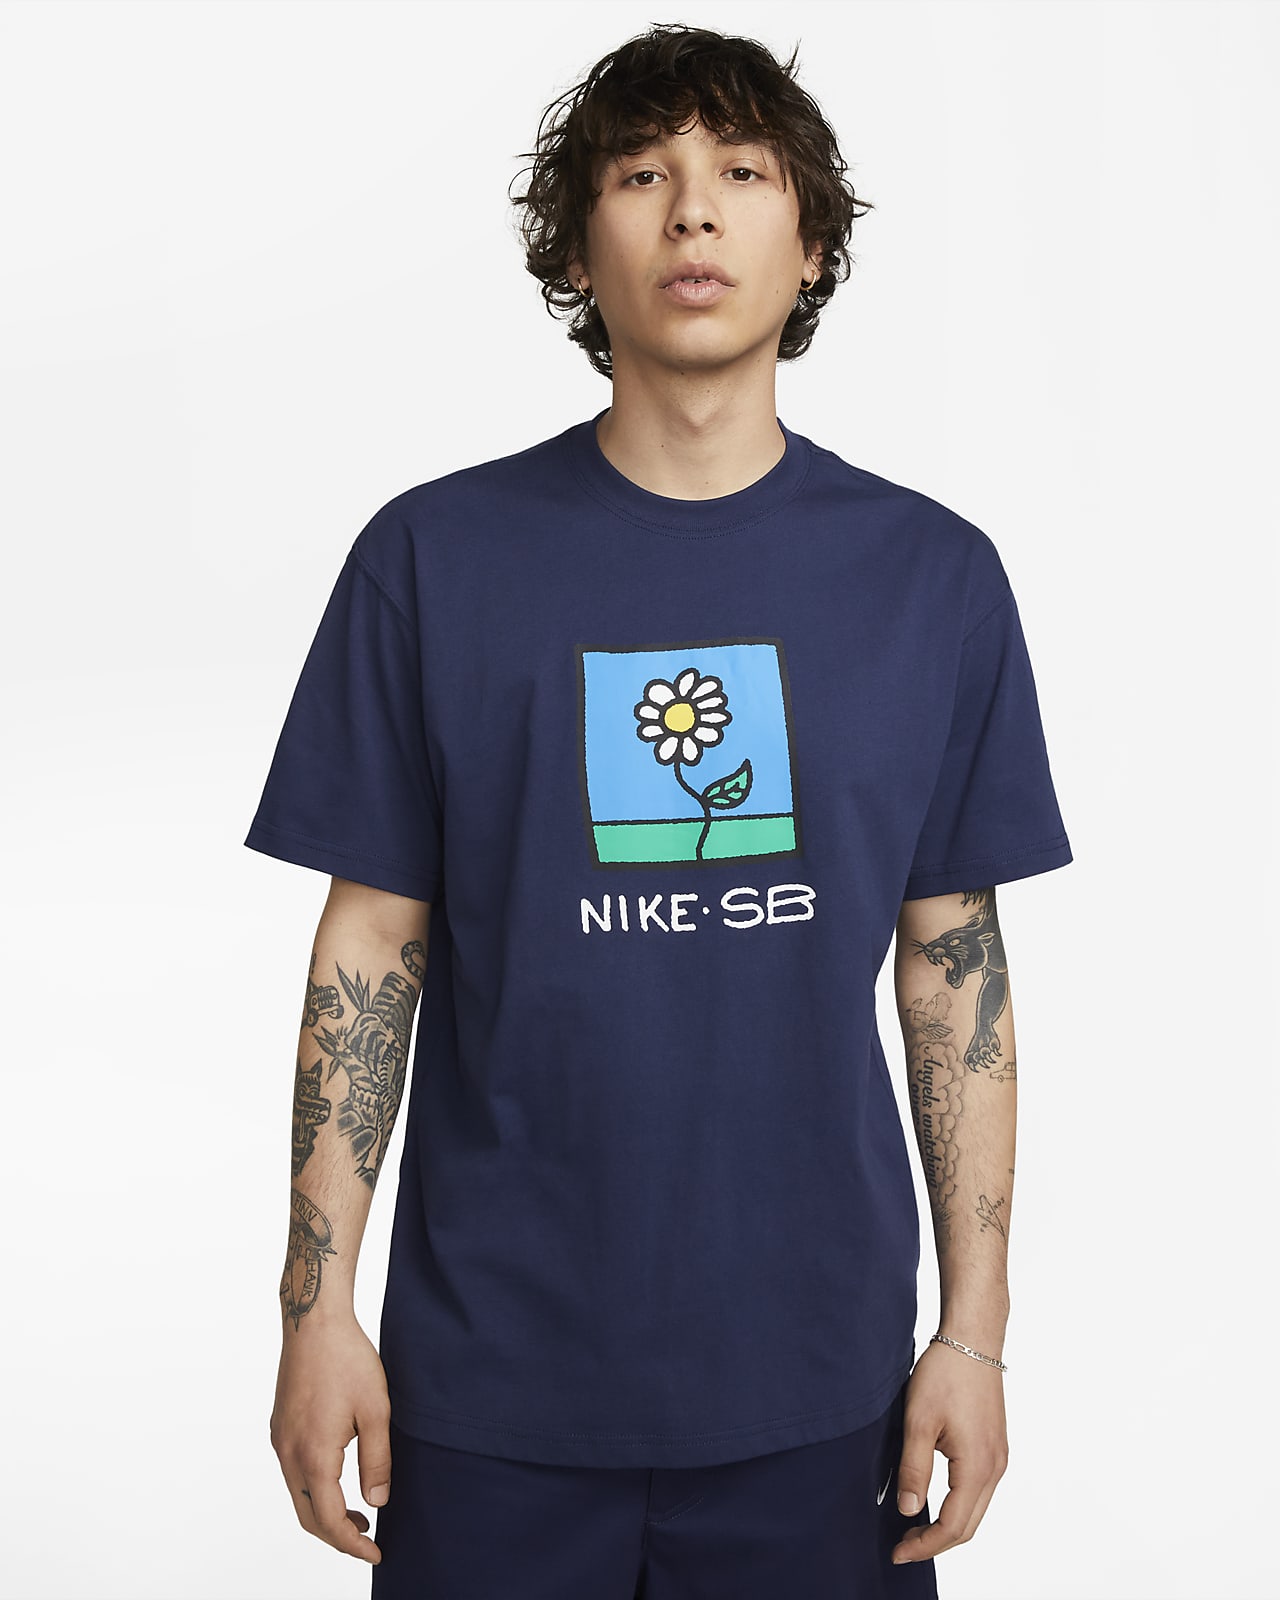 Nike SB Men's Skate T-Shirt.